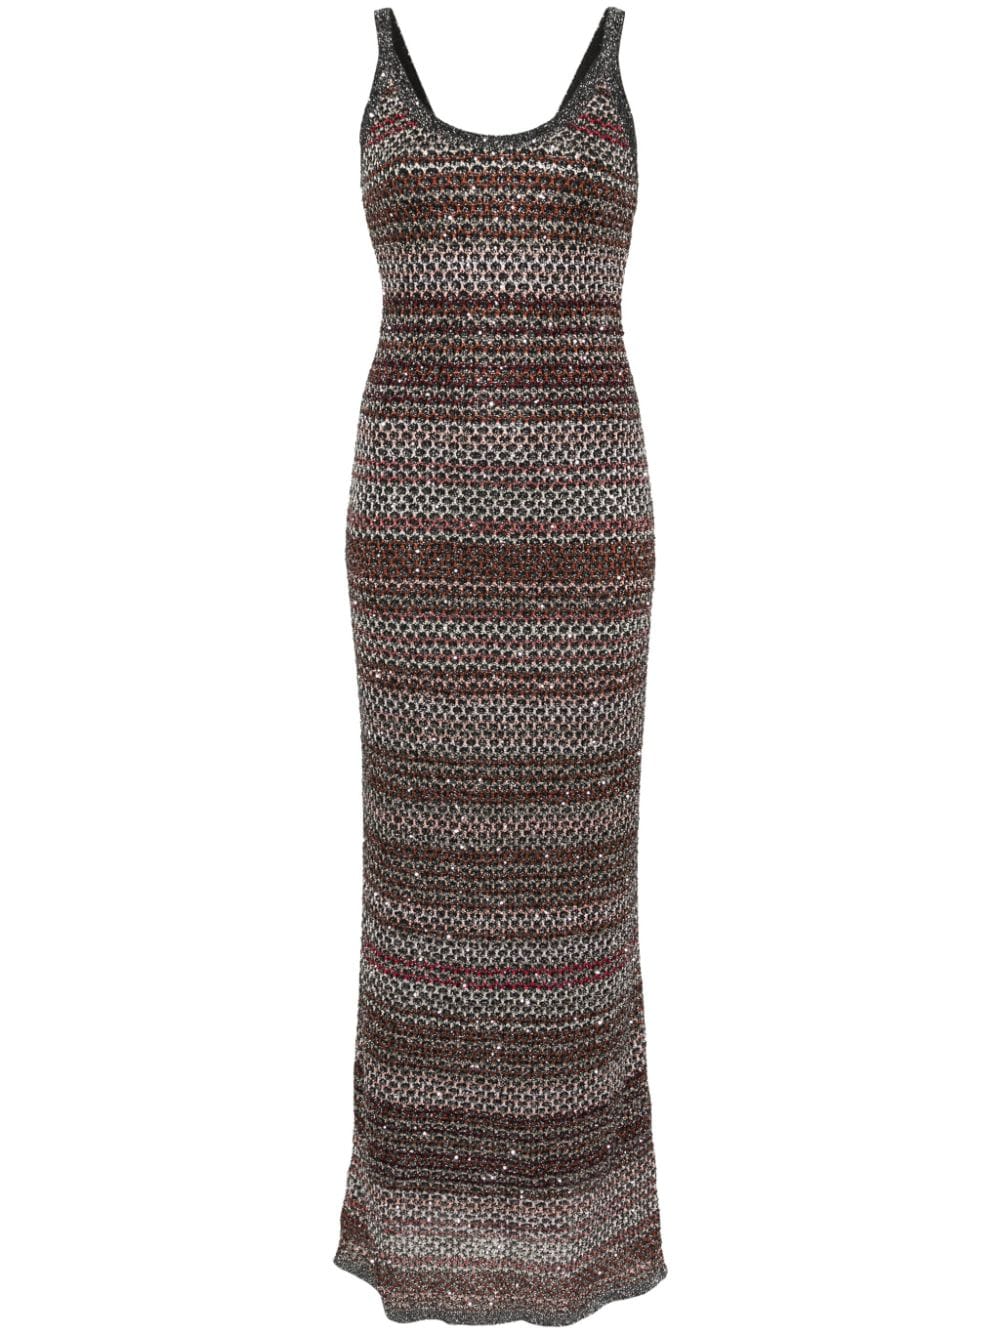 Long zigzag knit dress